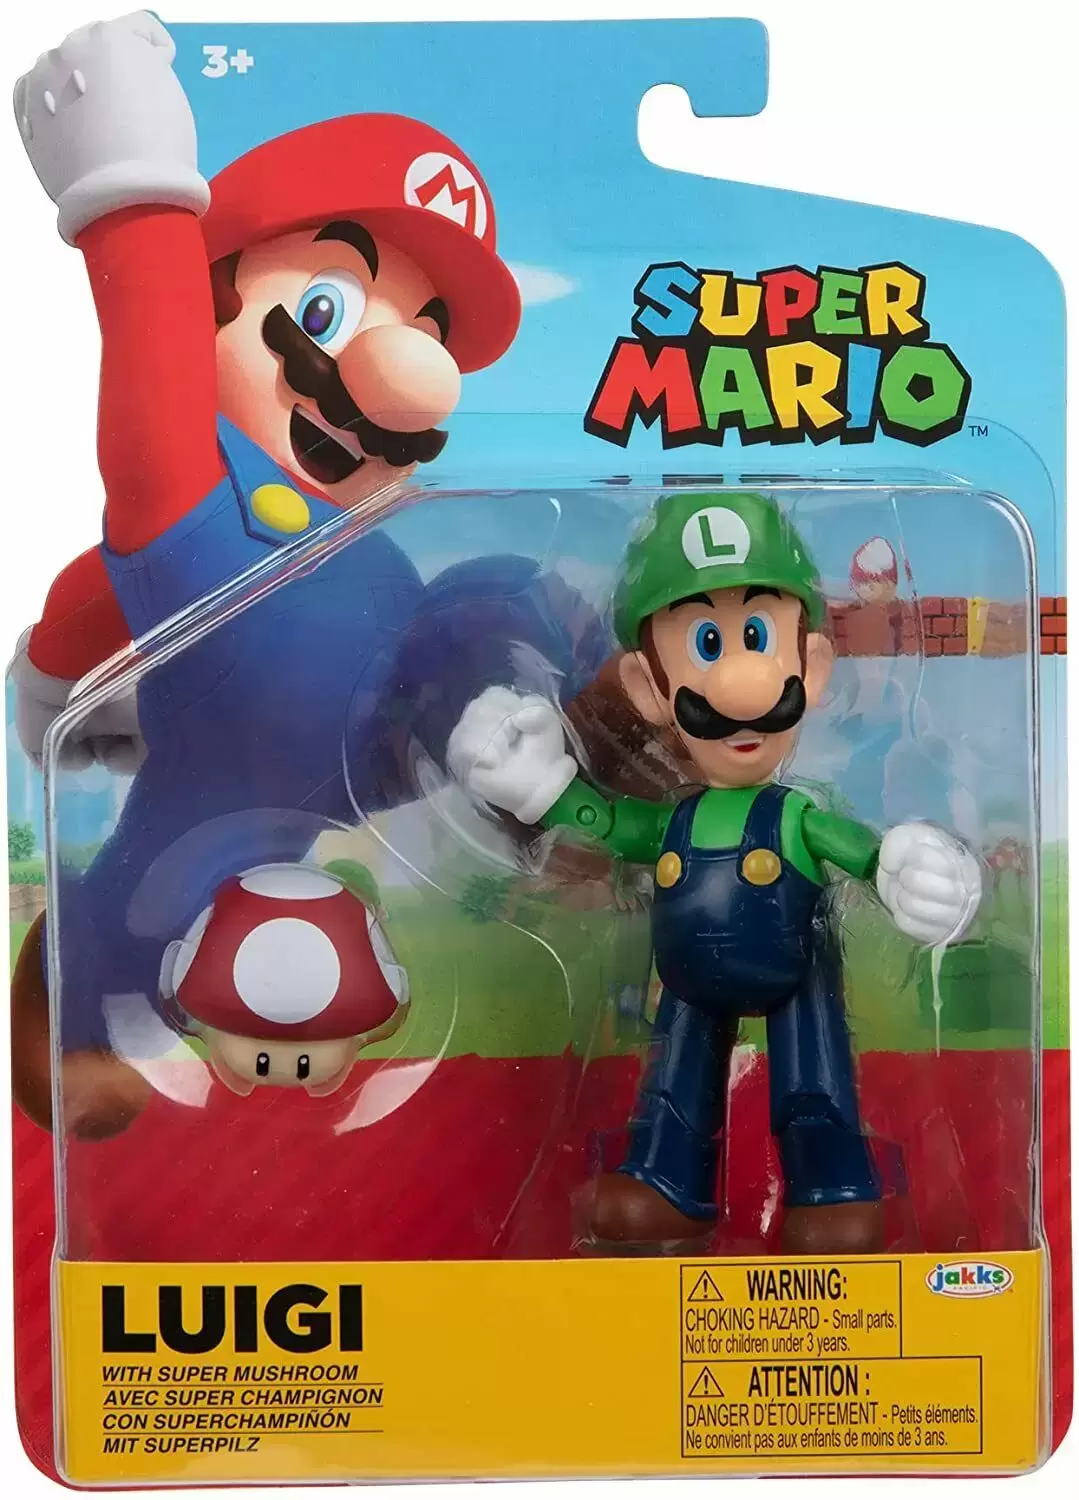 World of Nintendo - Luigi with Super Mushroom